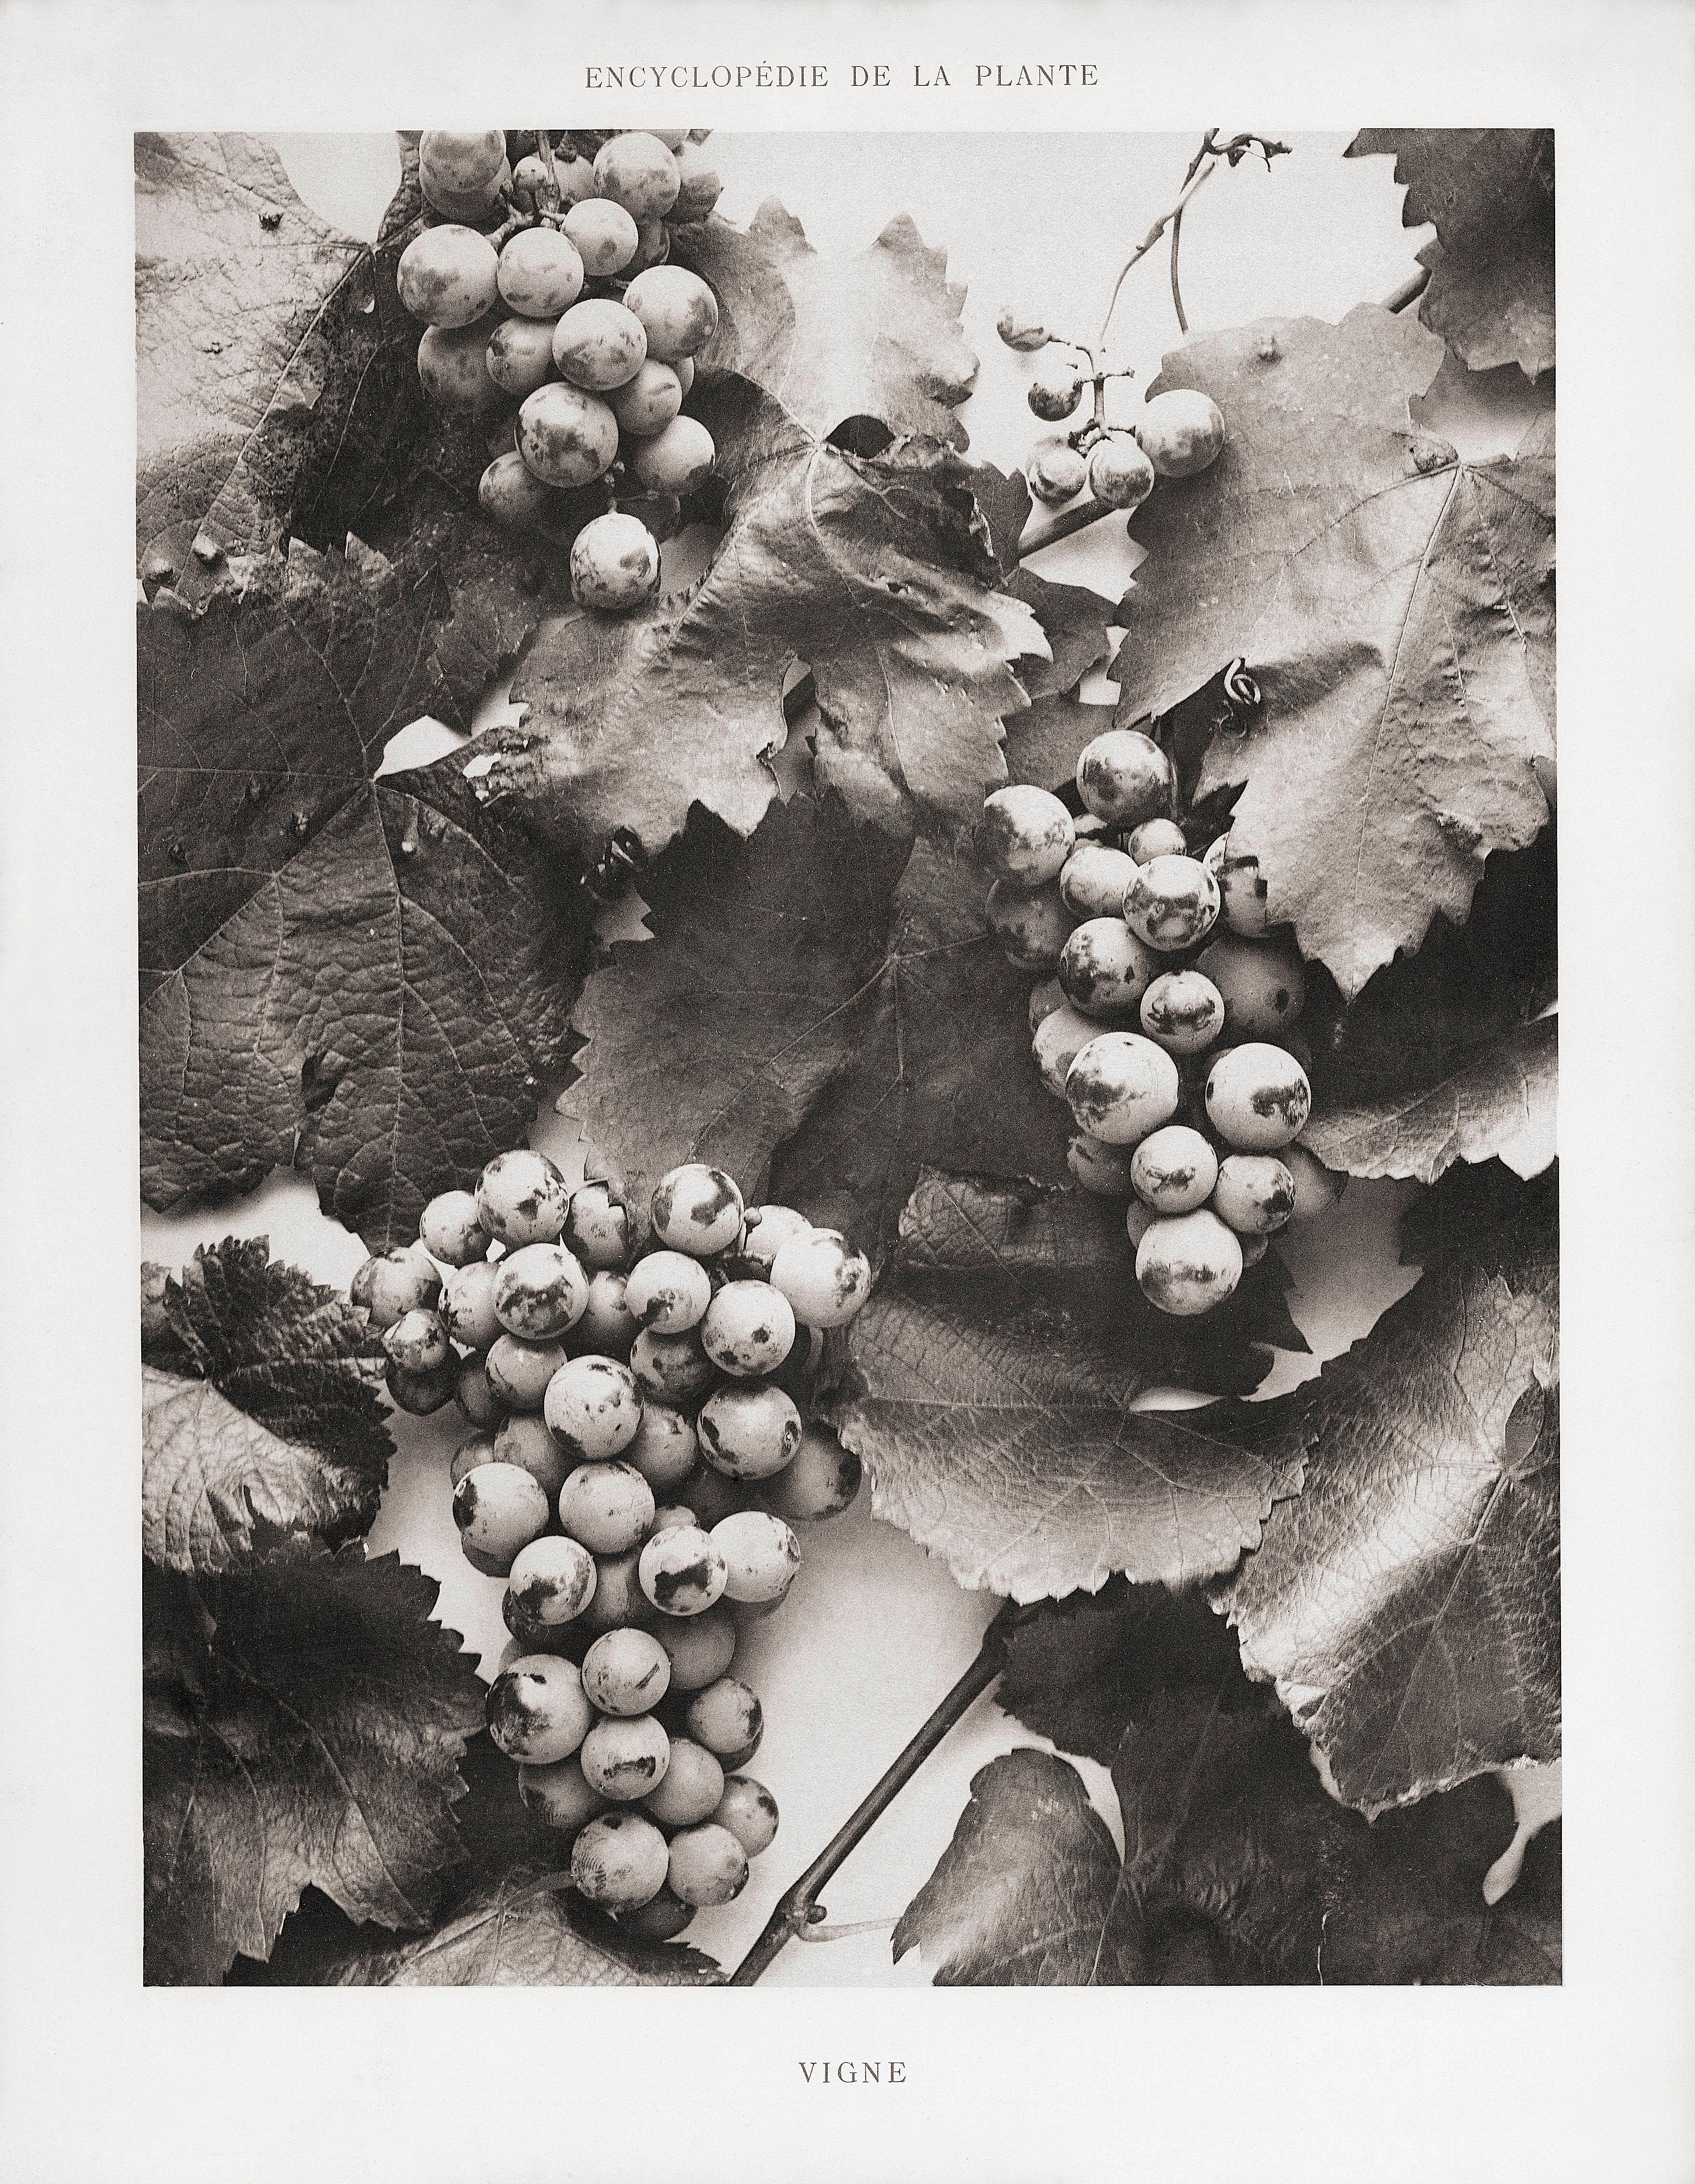 Plaszewski Still-Life Print -  Encyclopédie de la Plante - Vigne